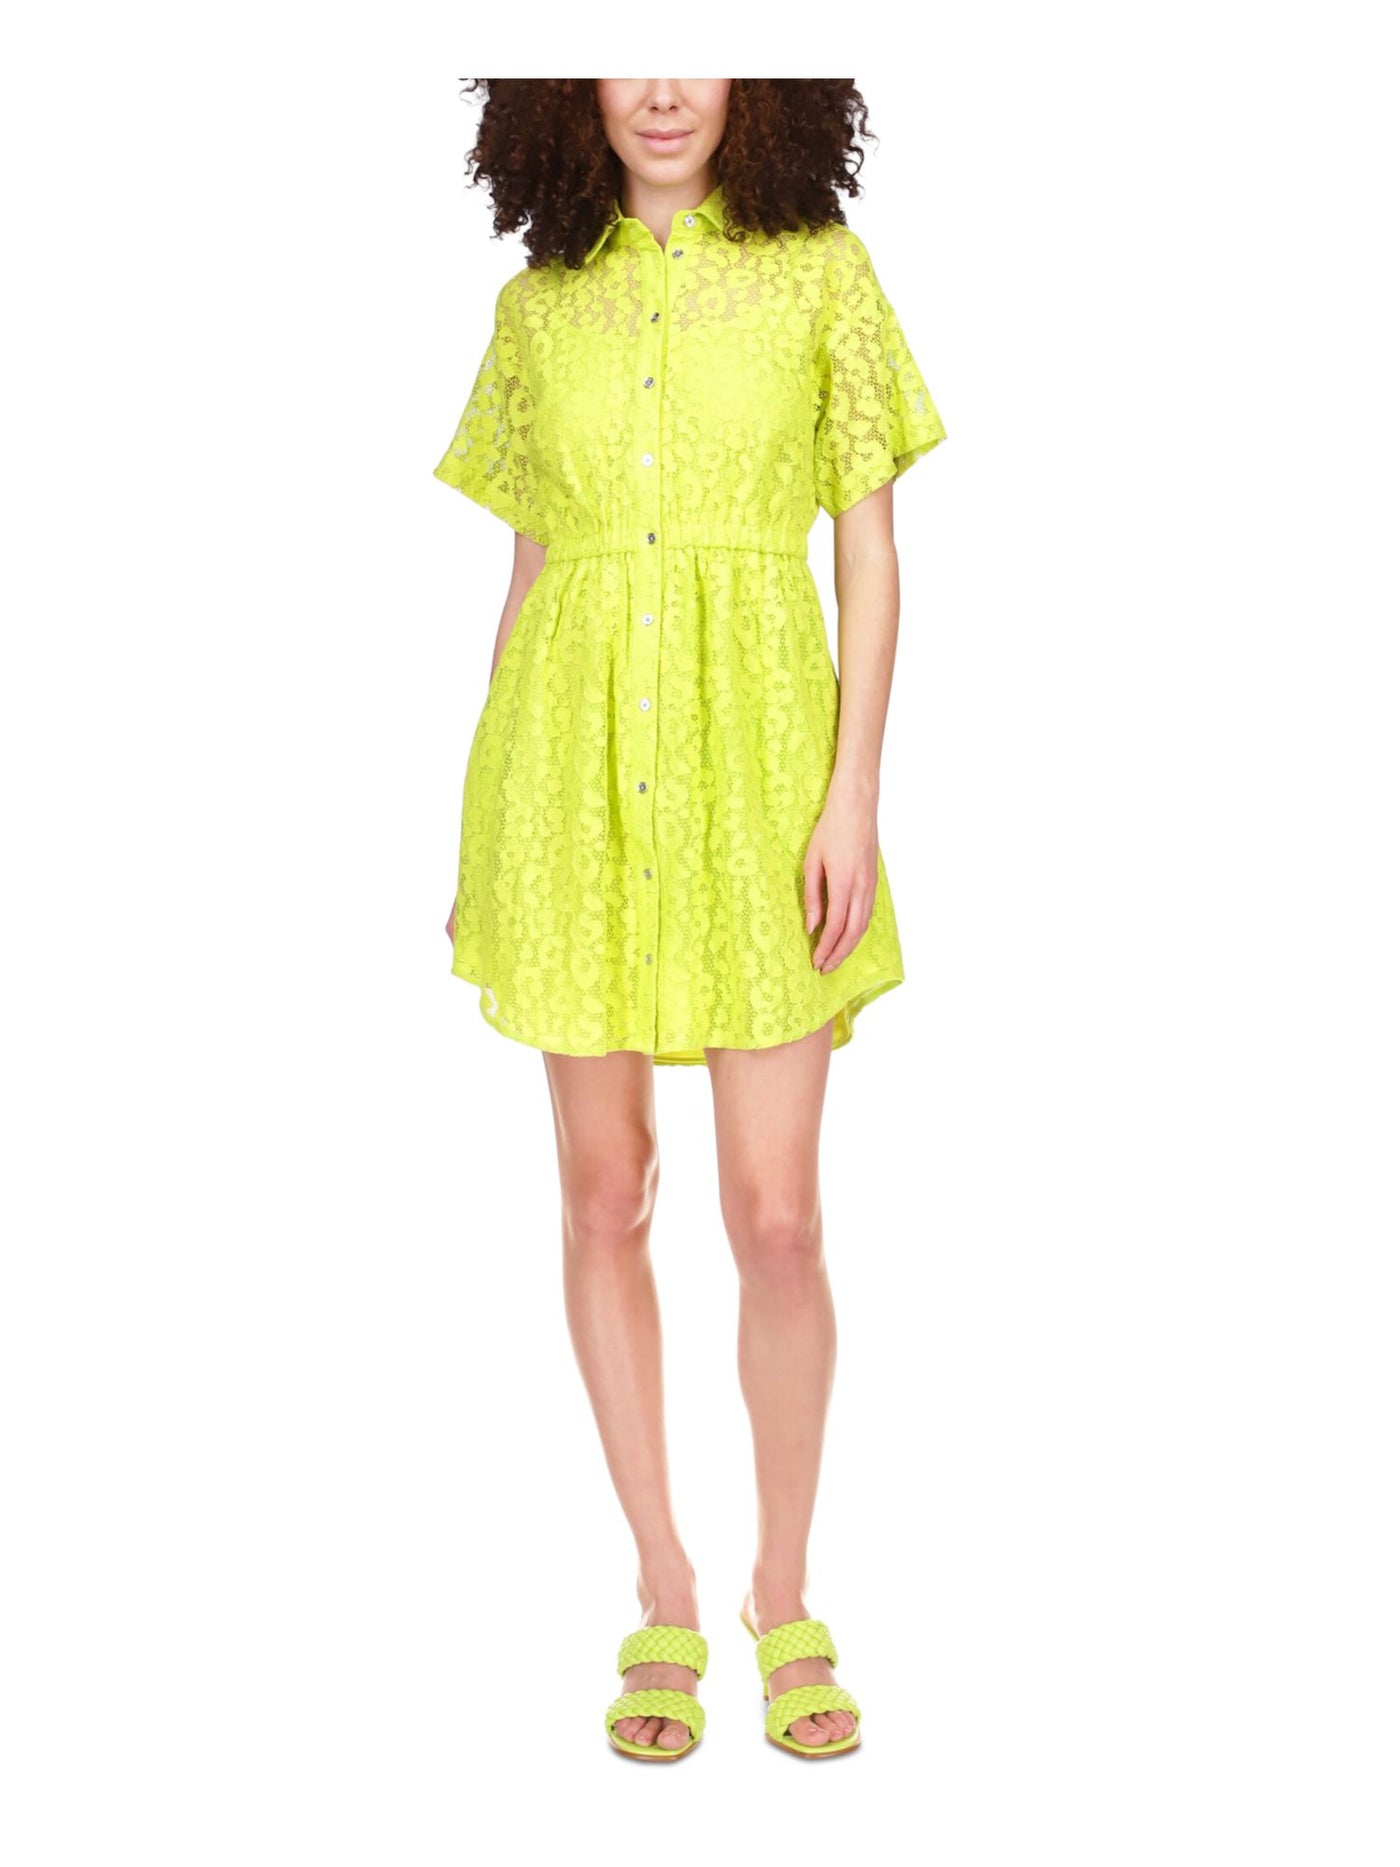 MICHAEL KORS Womens Green Lace Elastic Waist Curved Hem Lined Short Sleeve Point Collar Short Party Shirt Dress S